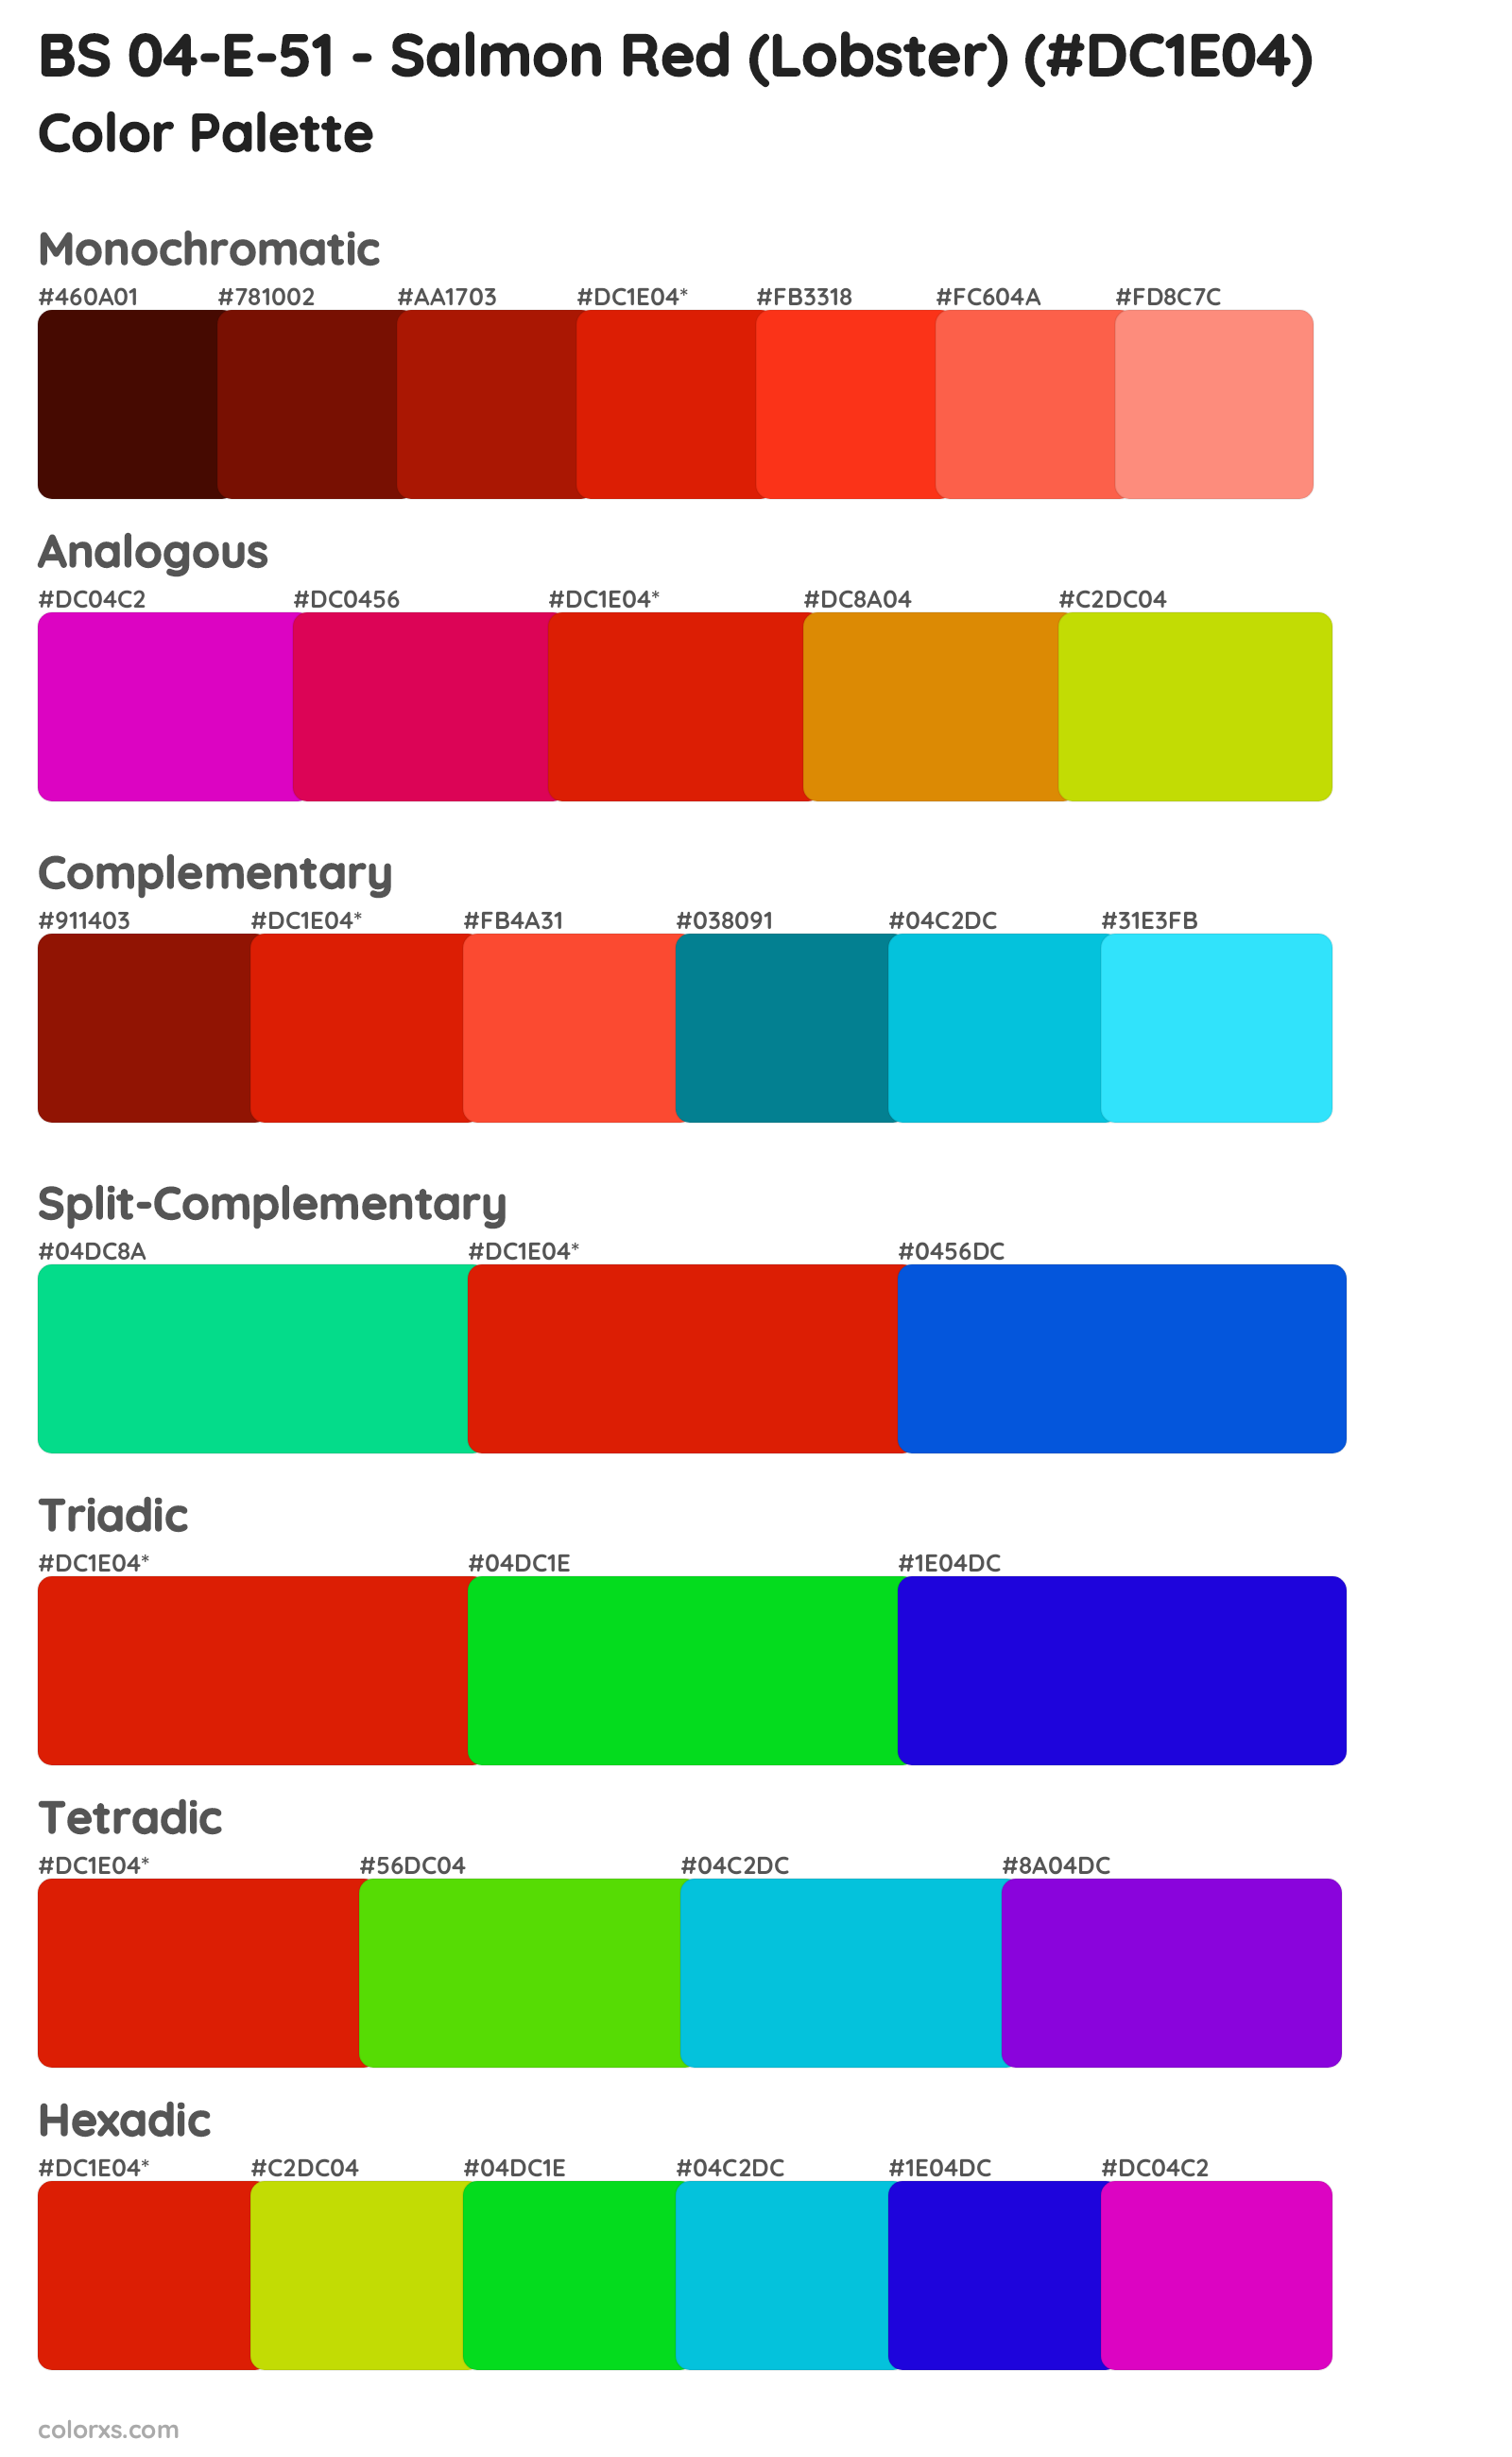 BS 04-E-51 - Salmon Red (Lobster) Color Scheme Palettes